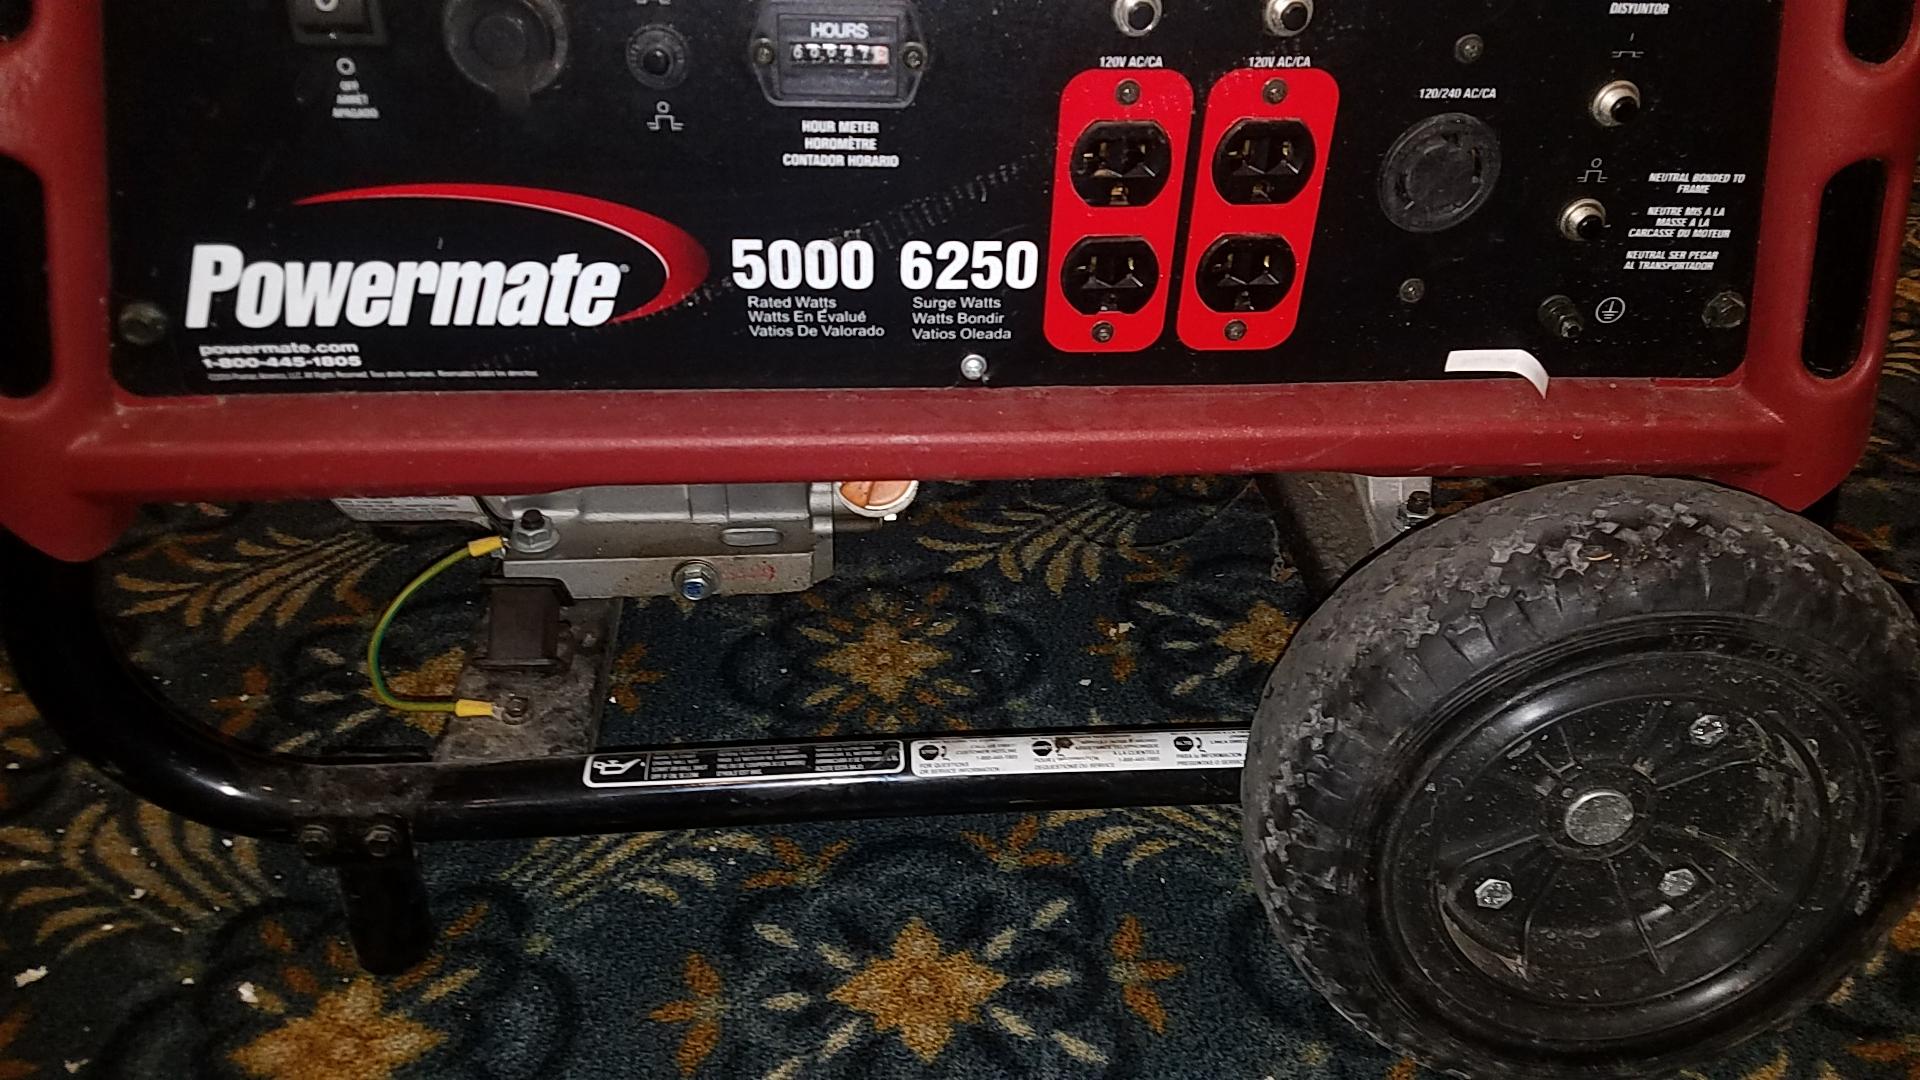 Power mate Generator 5000 watts, clean unit that runs well.